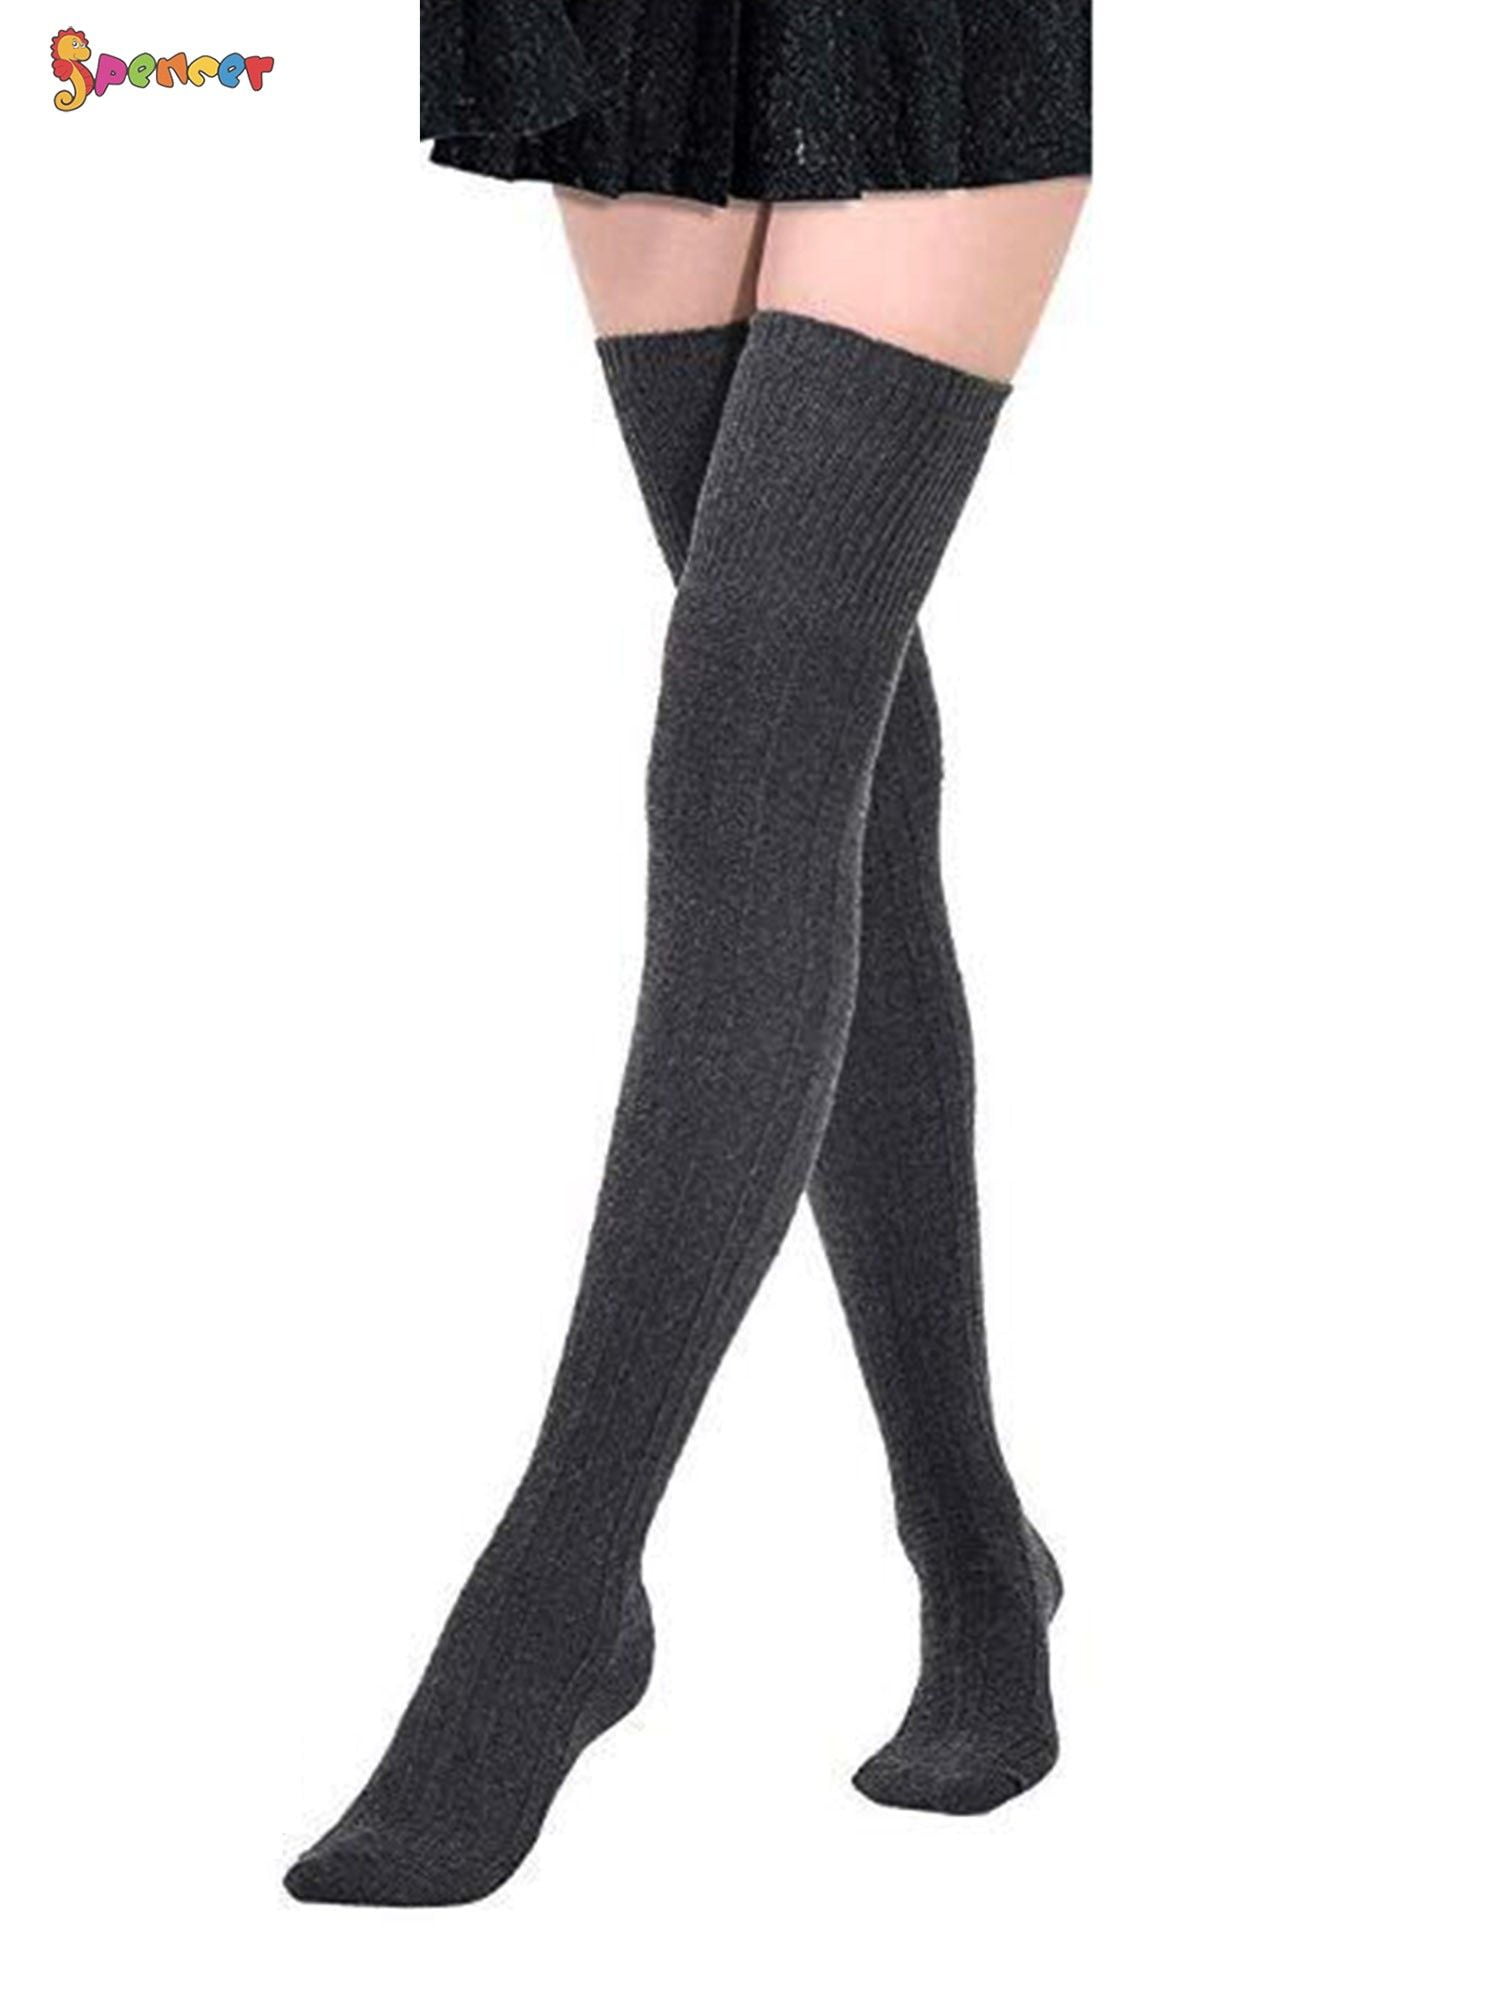 Girls Knit Thigh High Socks Knee High Tube Sock with Stripes， School Uniform Stockings Leg Warmers 